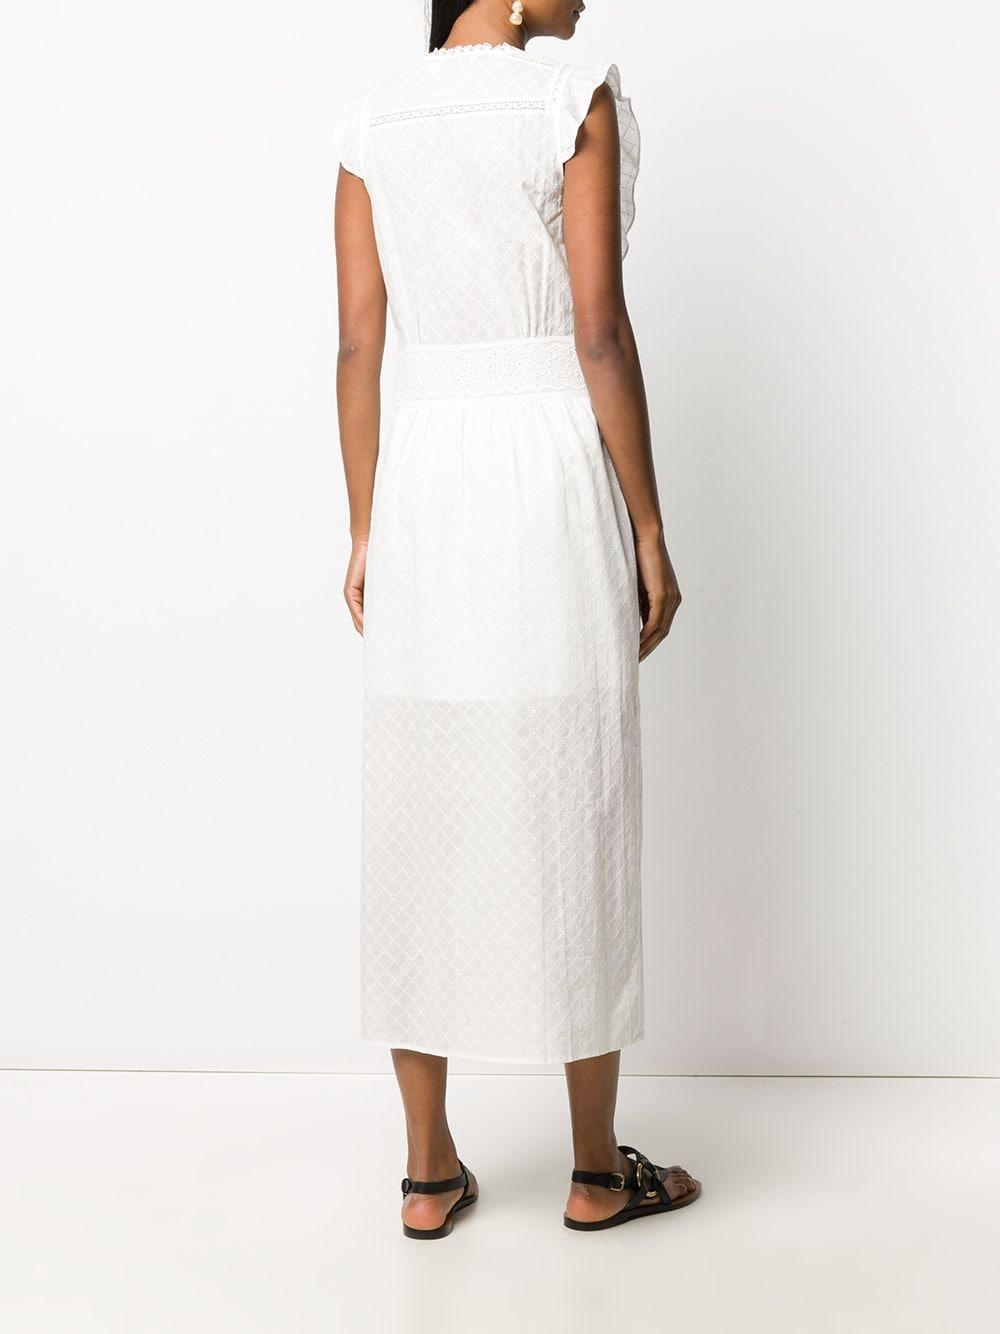 coach white dress, huge discount UP TO 78% OFF - larawebdev.com